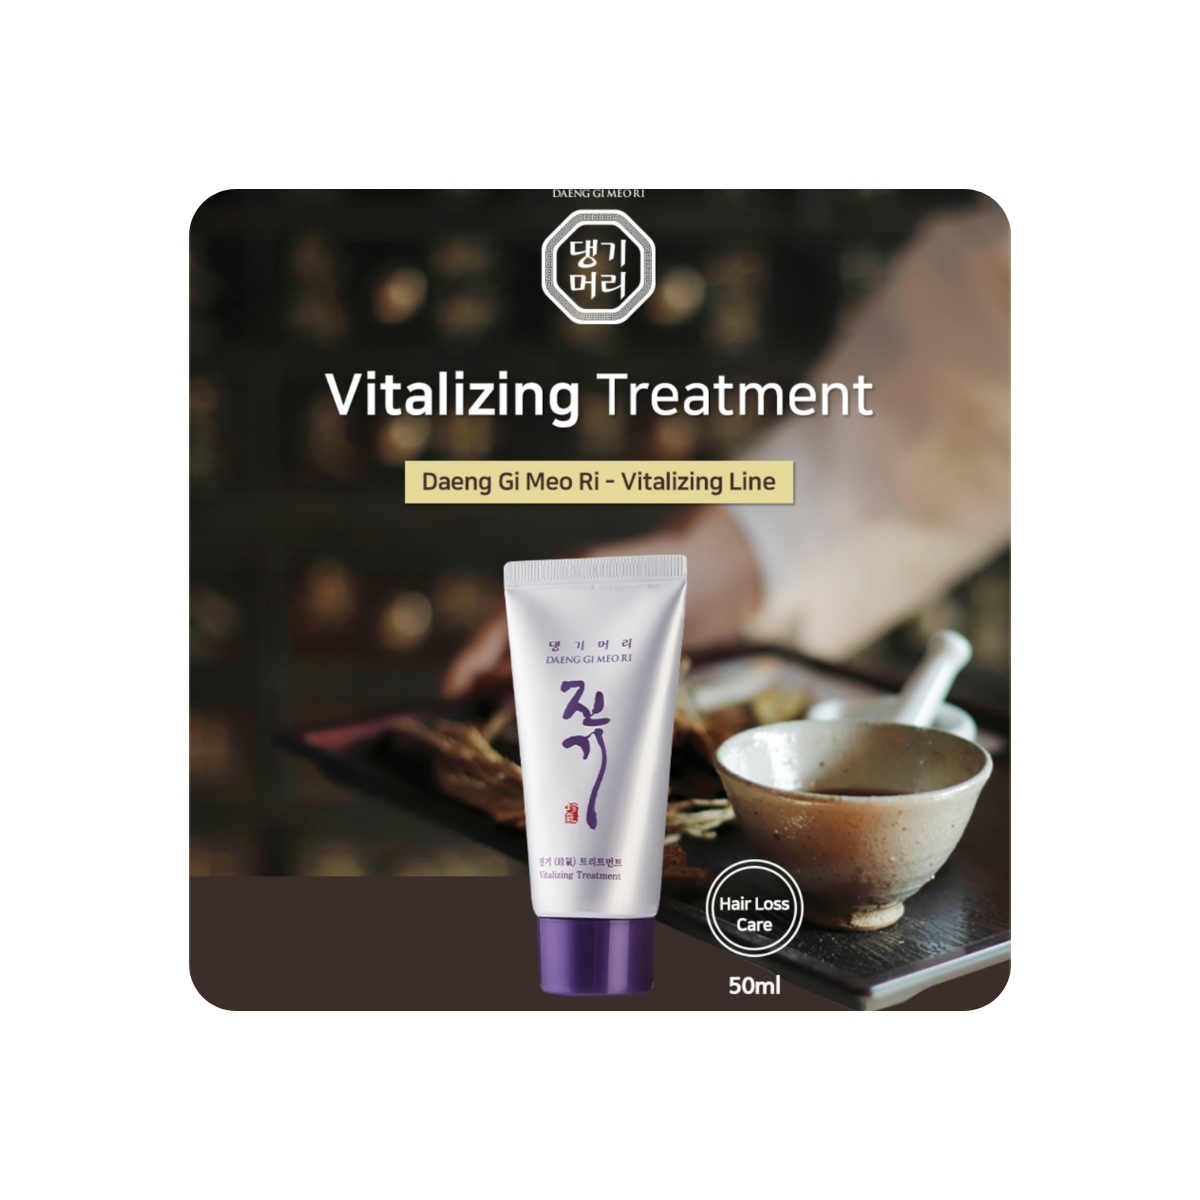 Cabello al mejor precio: Acondicionador Daeng Gi Meo Ri Vitalizing Treatment 50ml de Daeng Gi Meo Ri en Skin Thinks - 